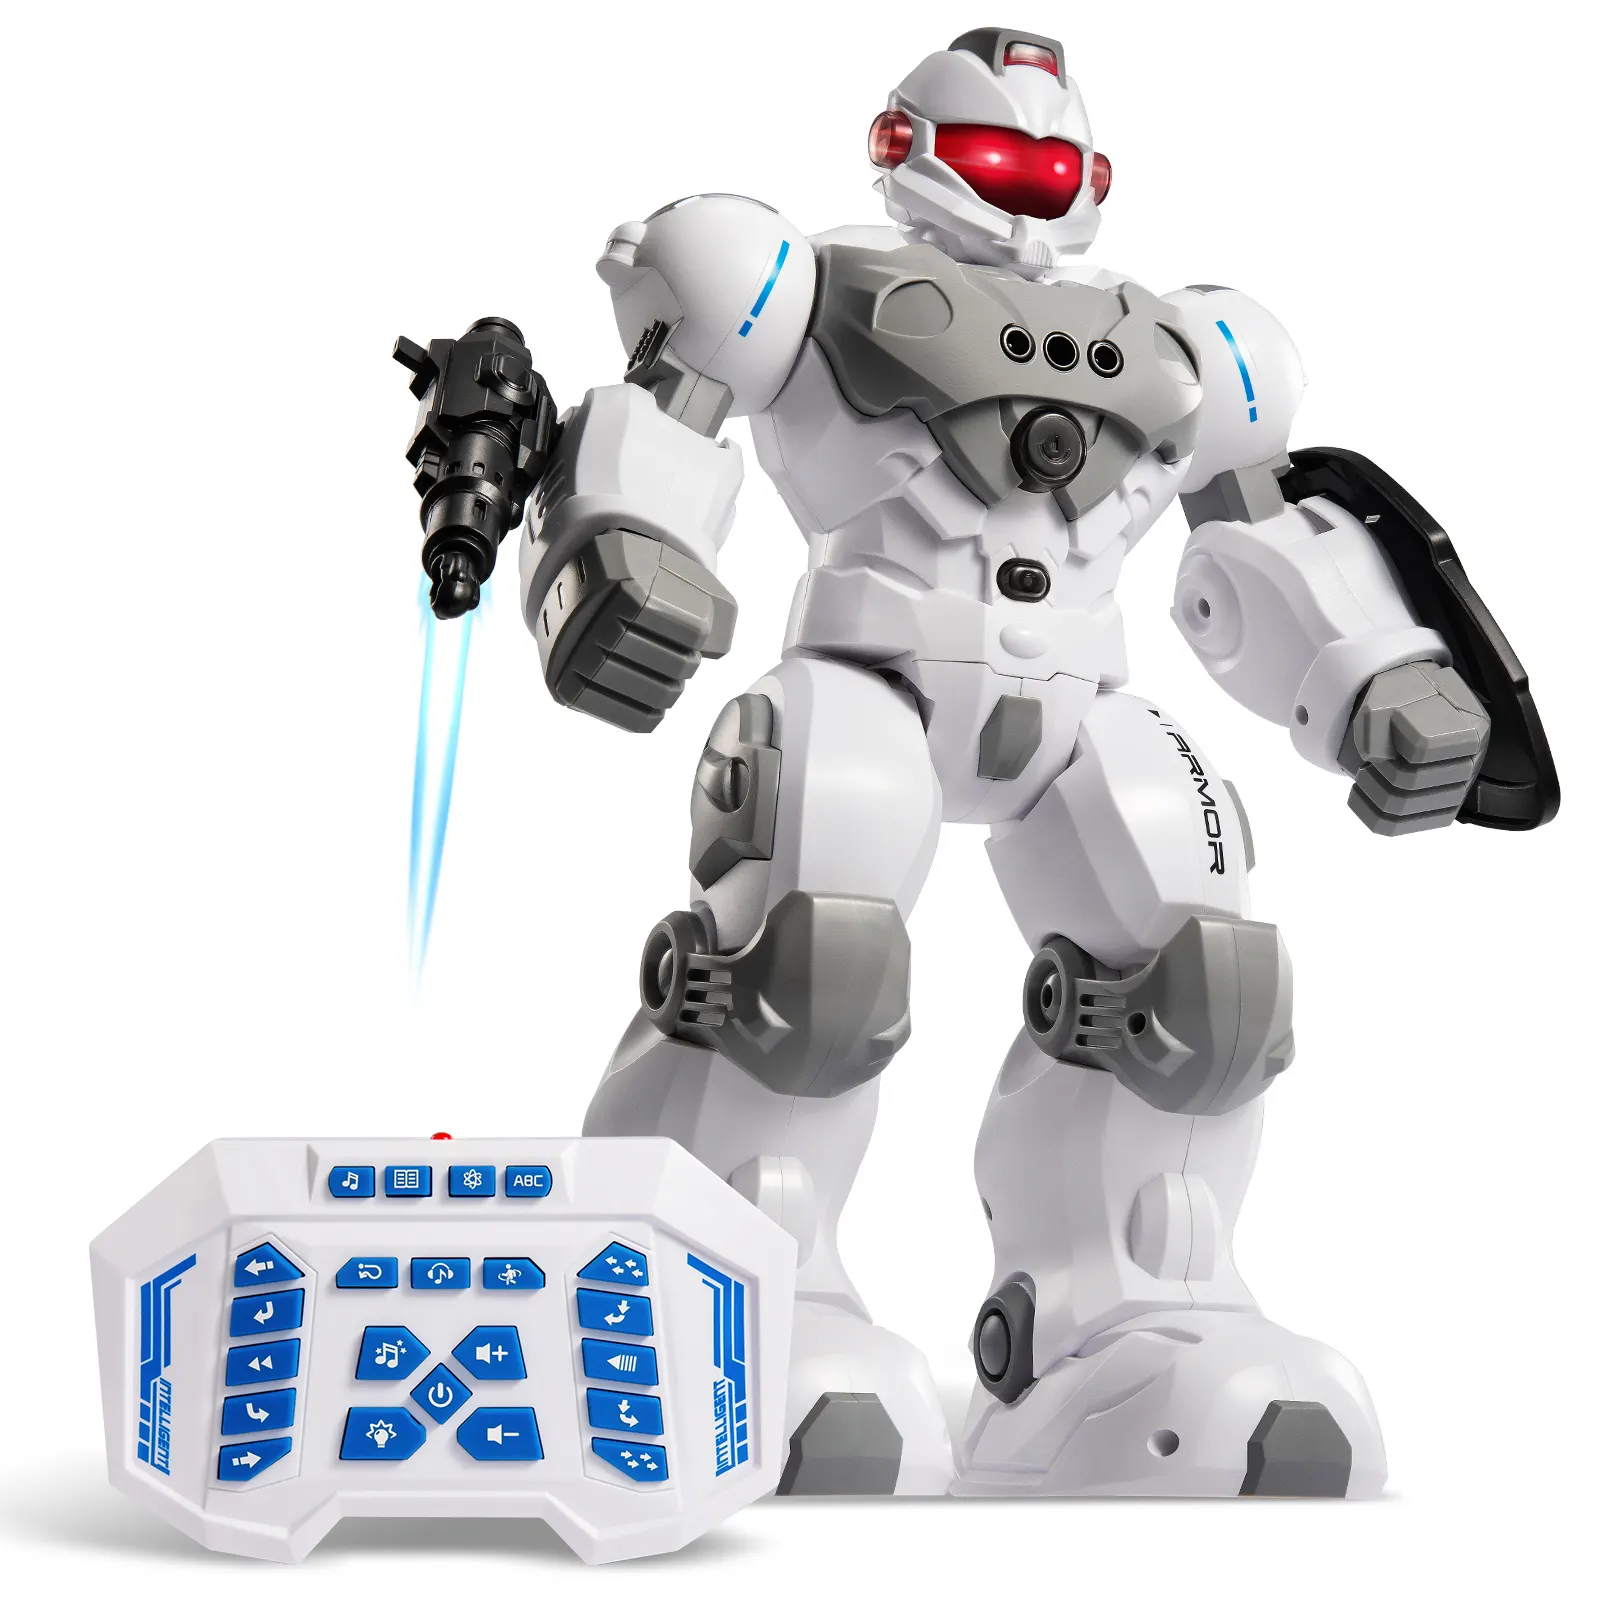 2022 radio control toys robots rc toys technology smart educational kids toys